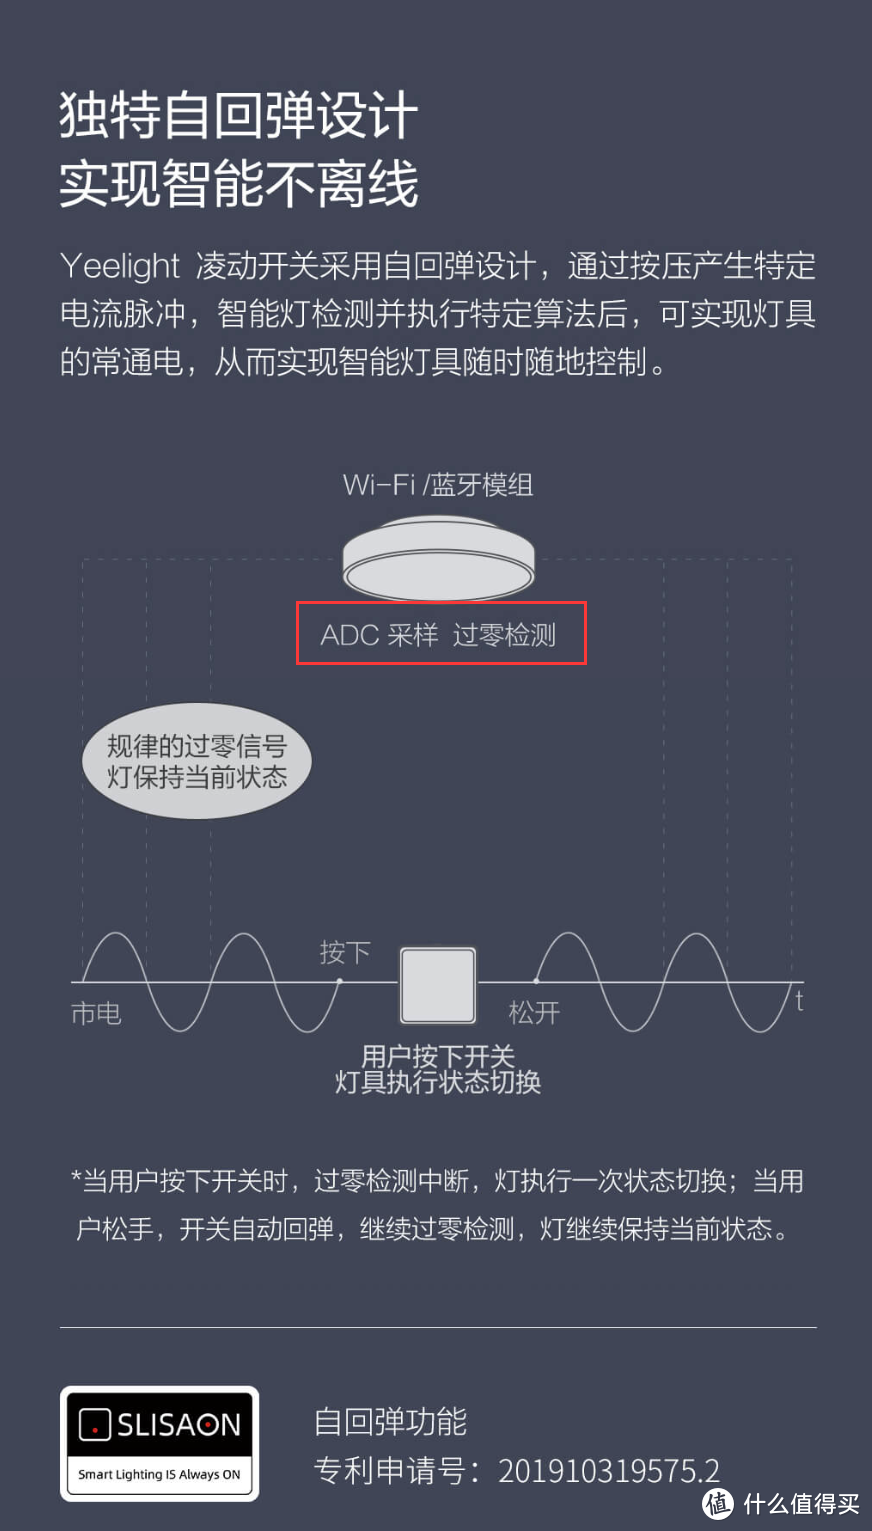 ADC全名Analog to Digital Converter，即模拟向数字信号转换